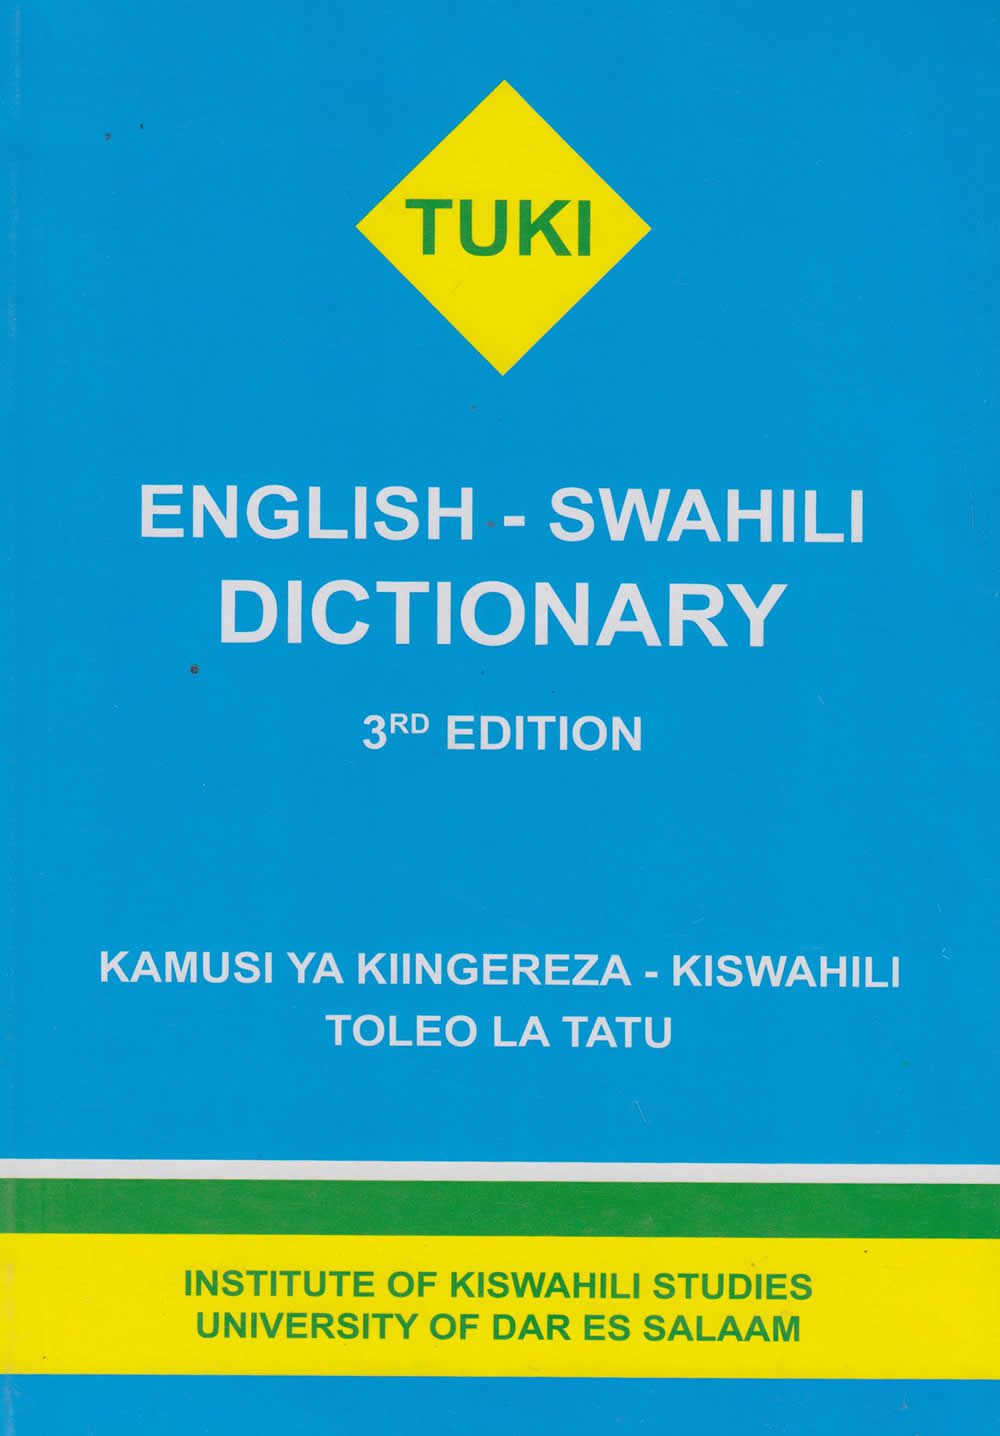 Tuki English-Swahili Dictionary nuriakenya